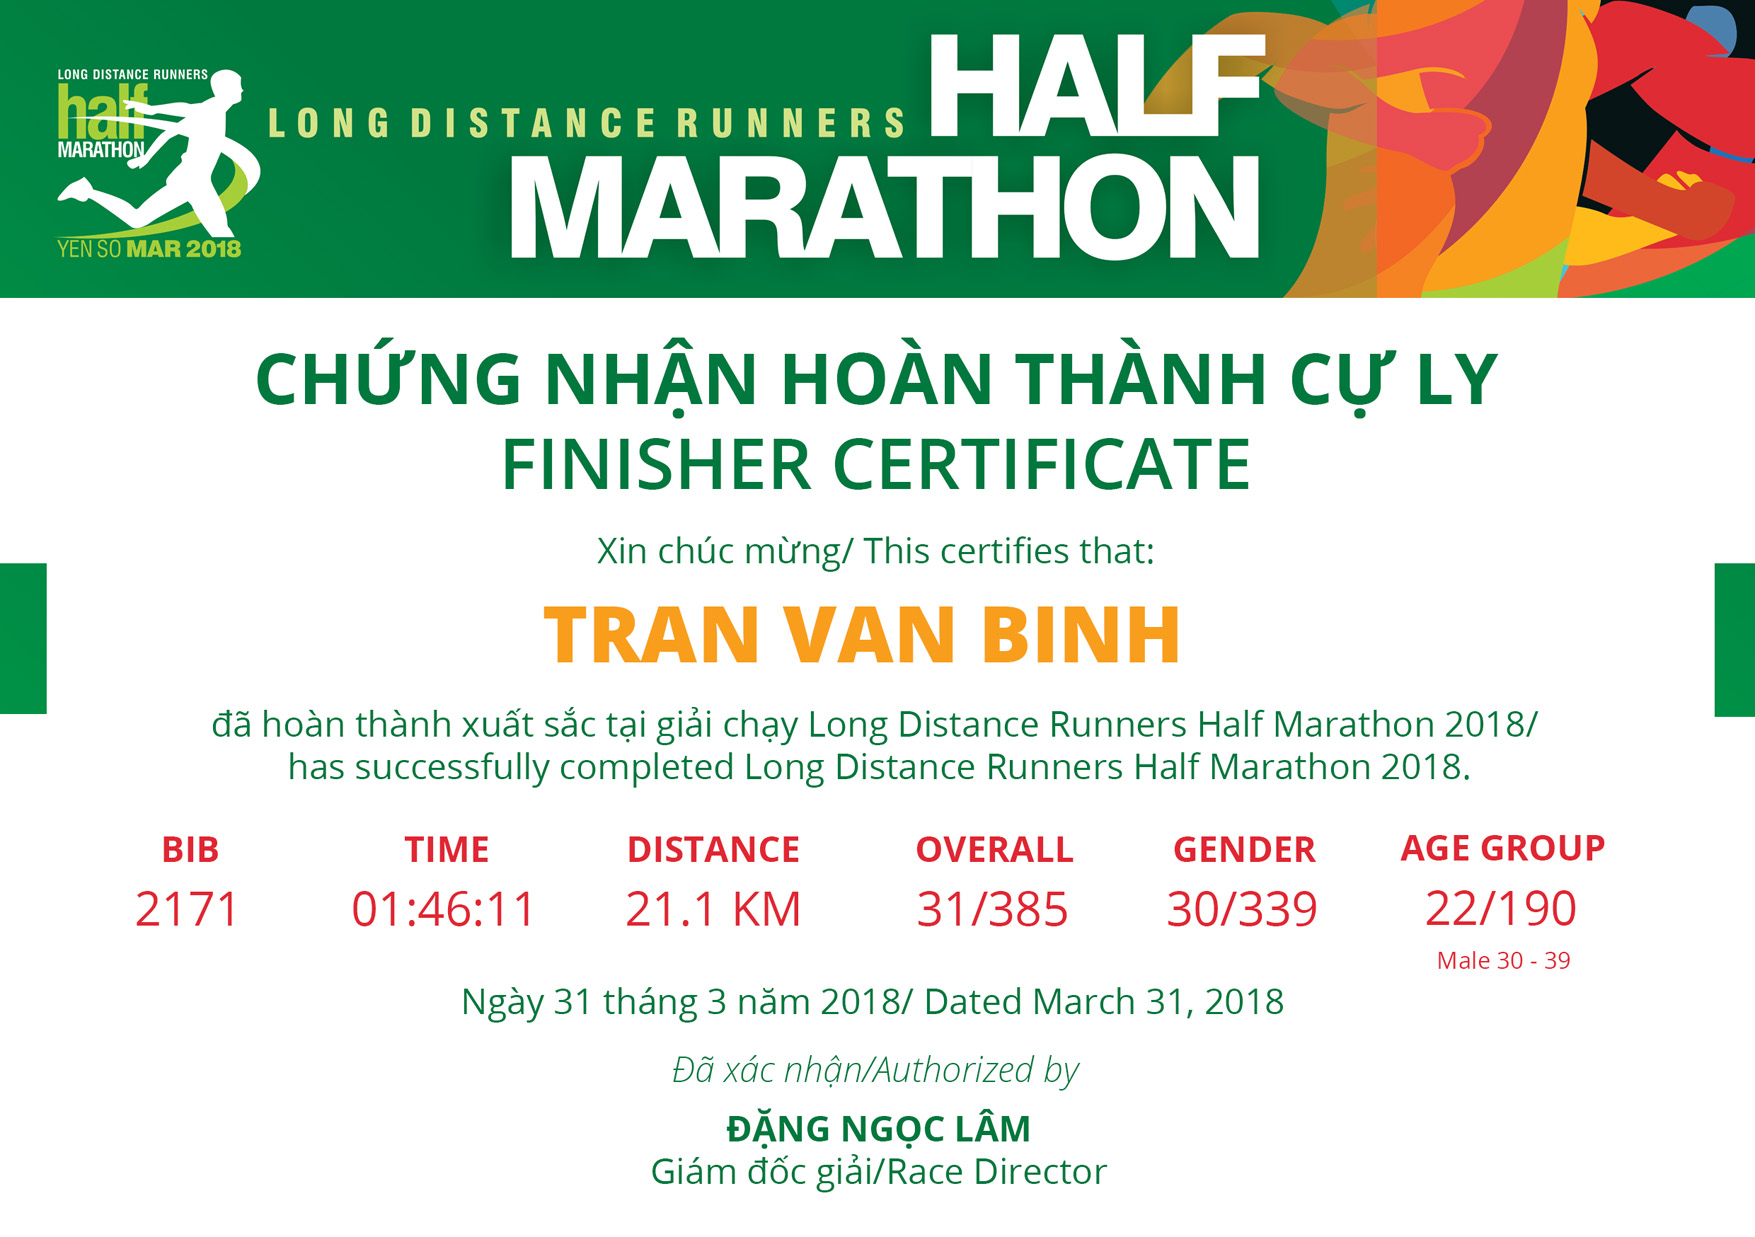 2171 - Tran Van Binh